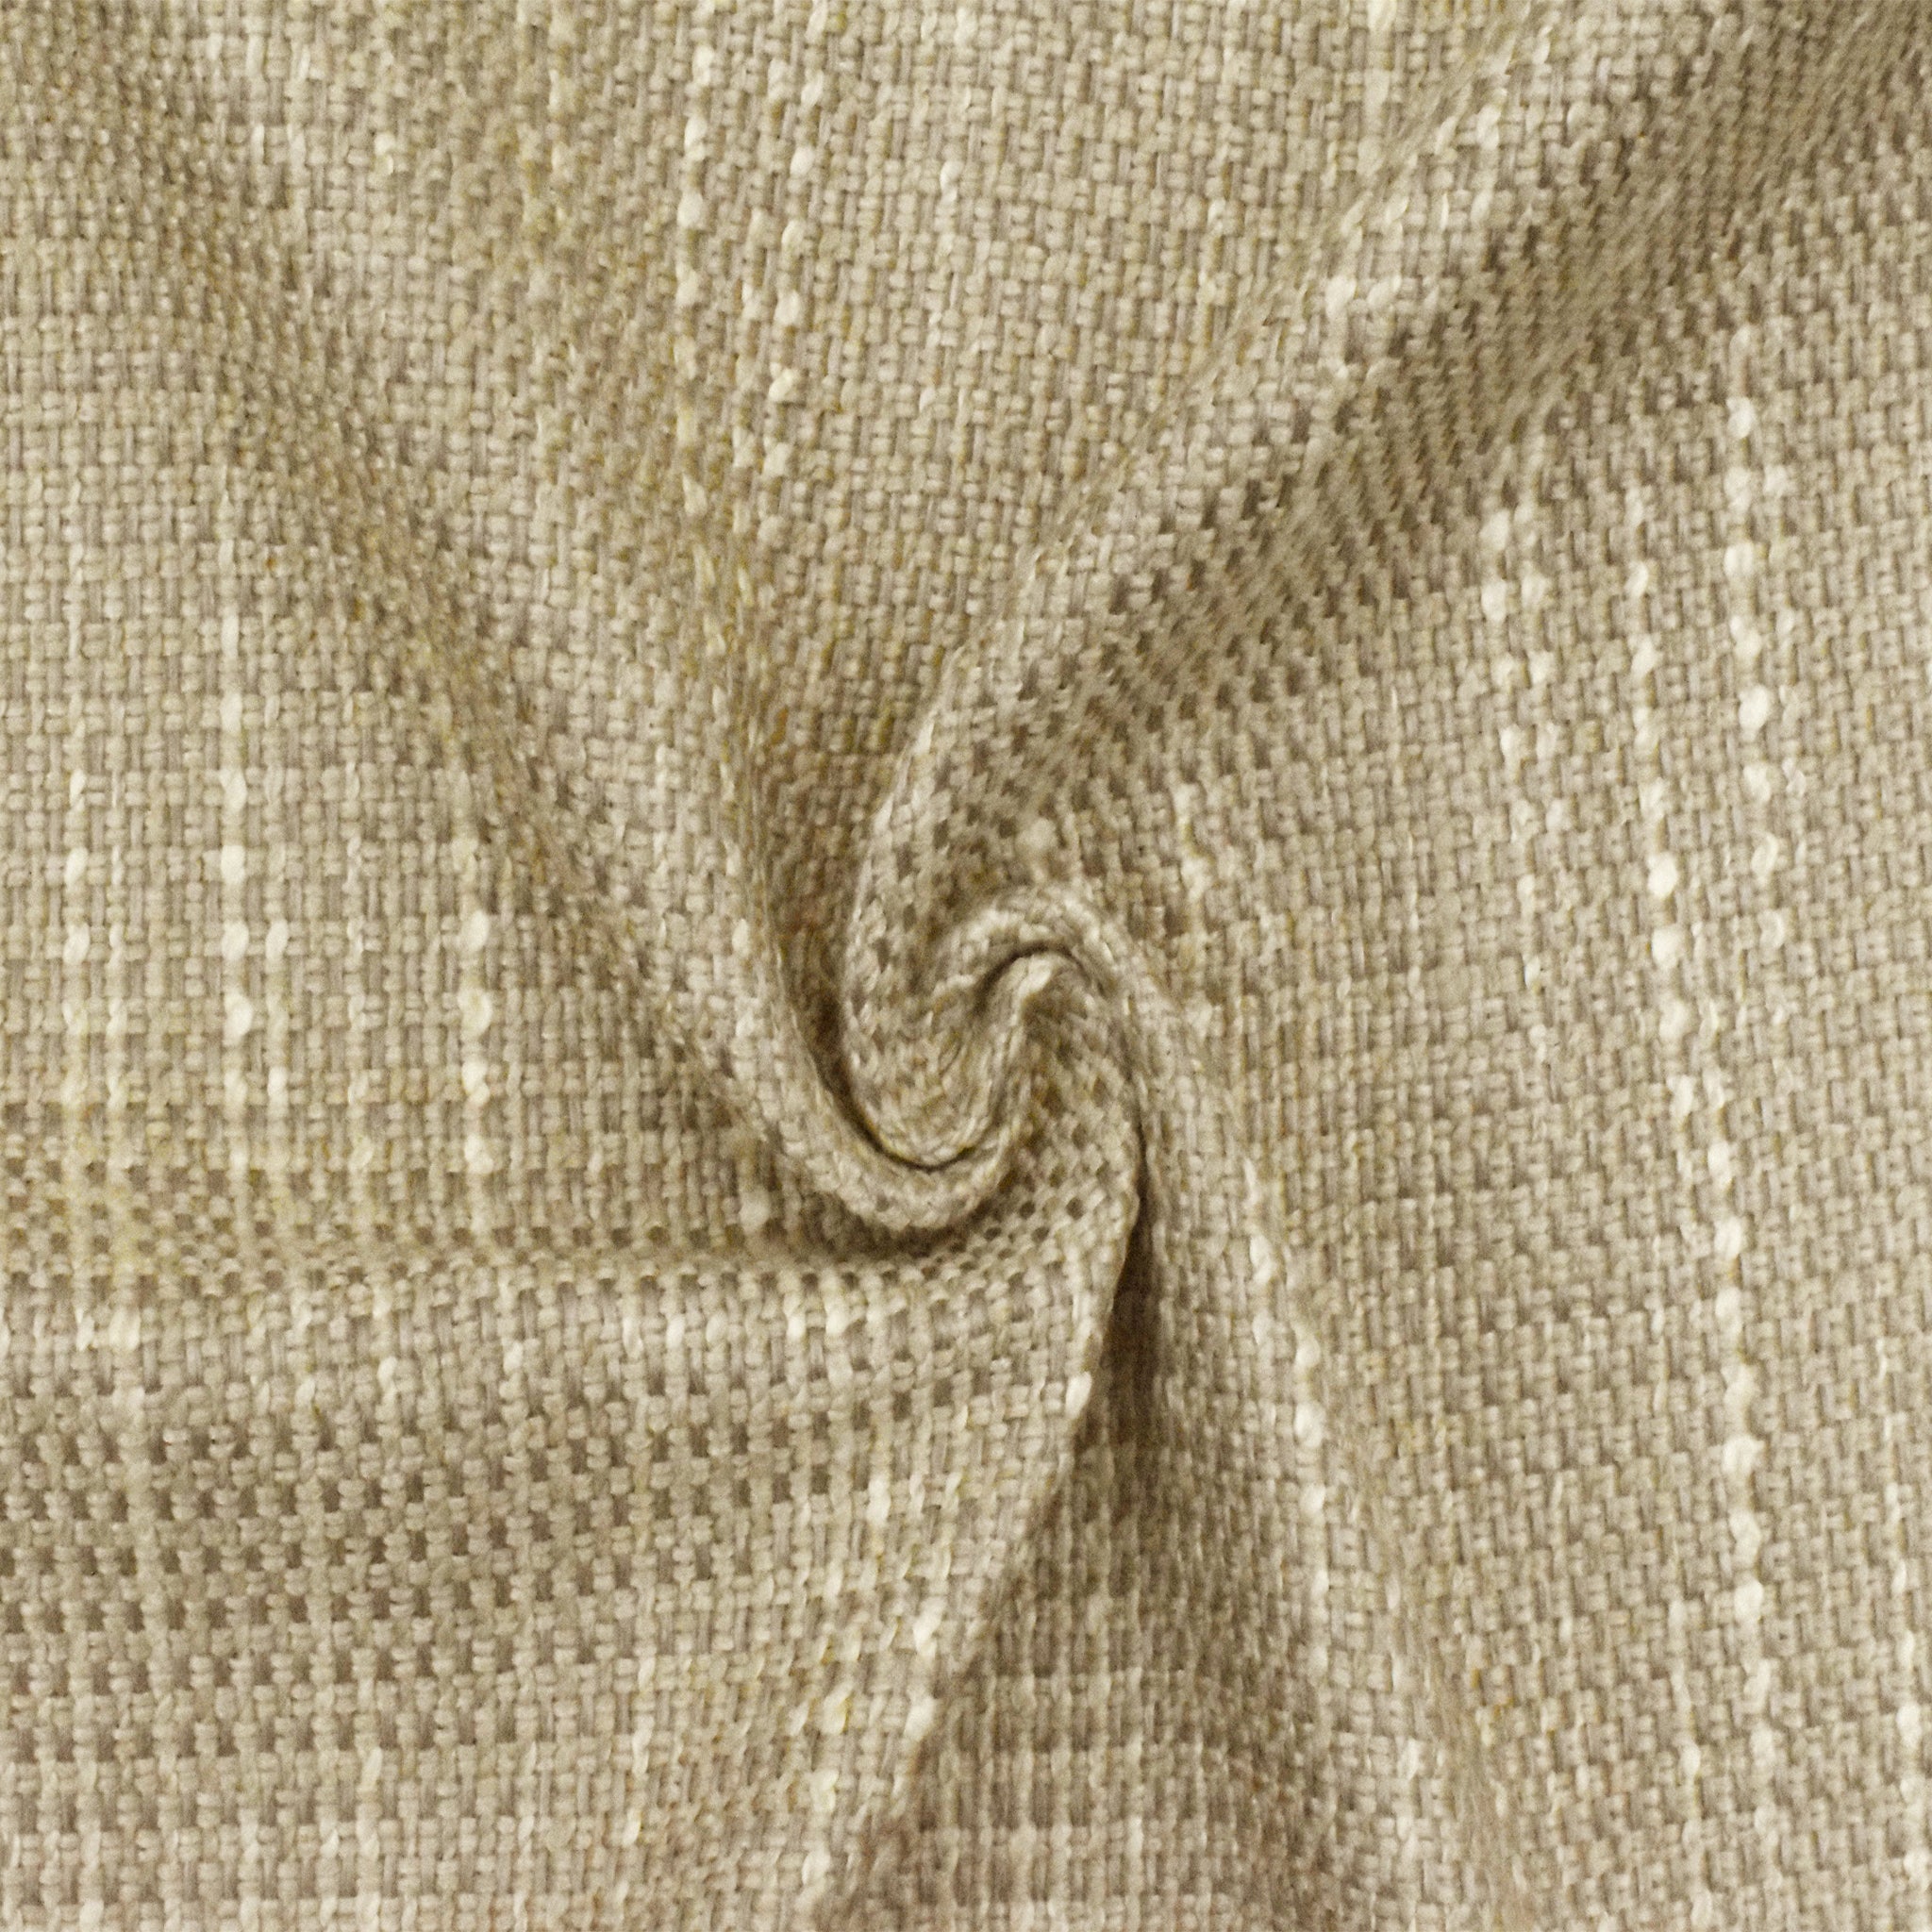 Acrylic Blend Tweed Suiting - Beige / Off-White / Earthy Brown